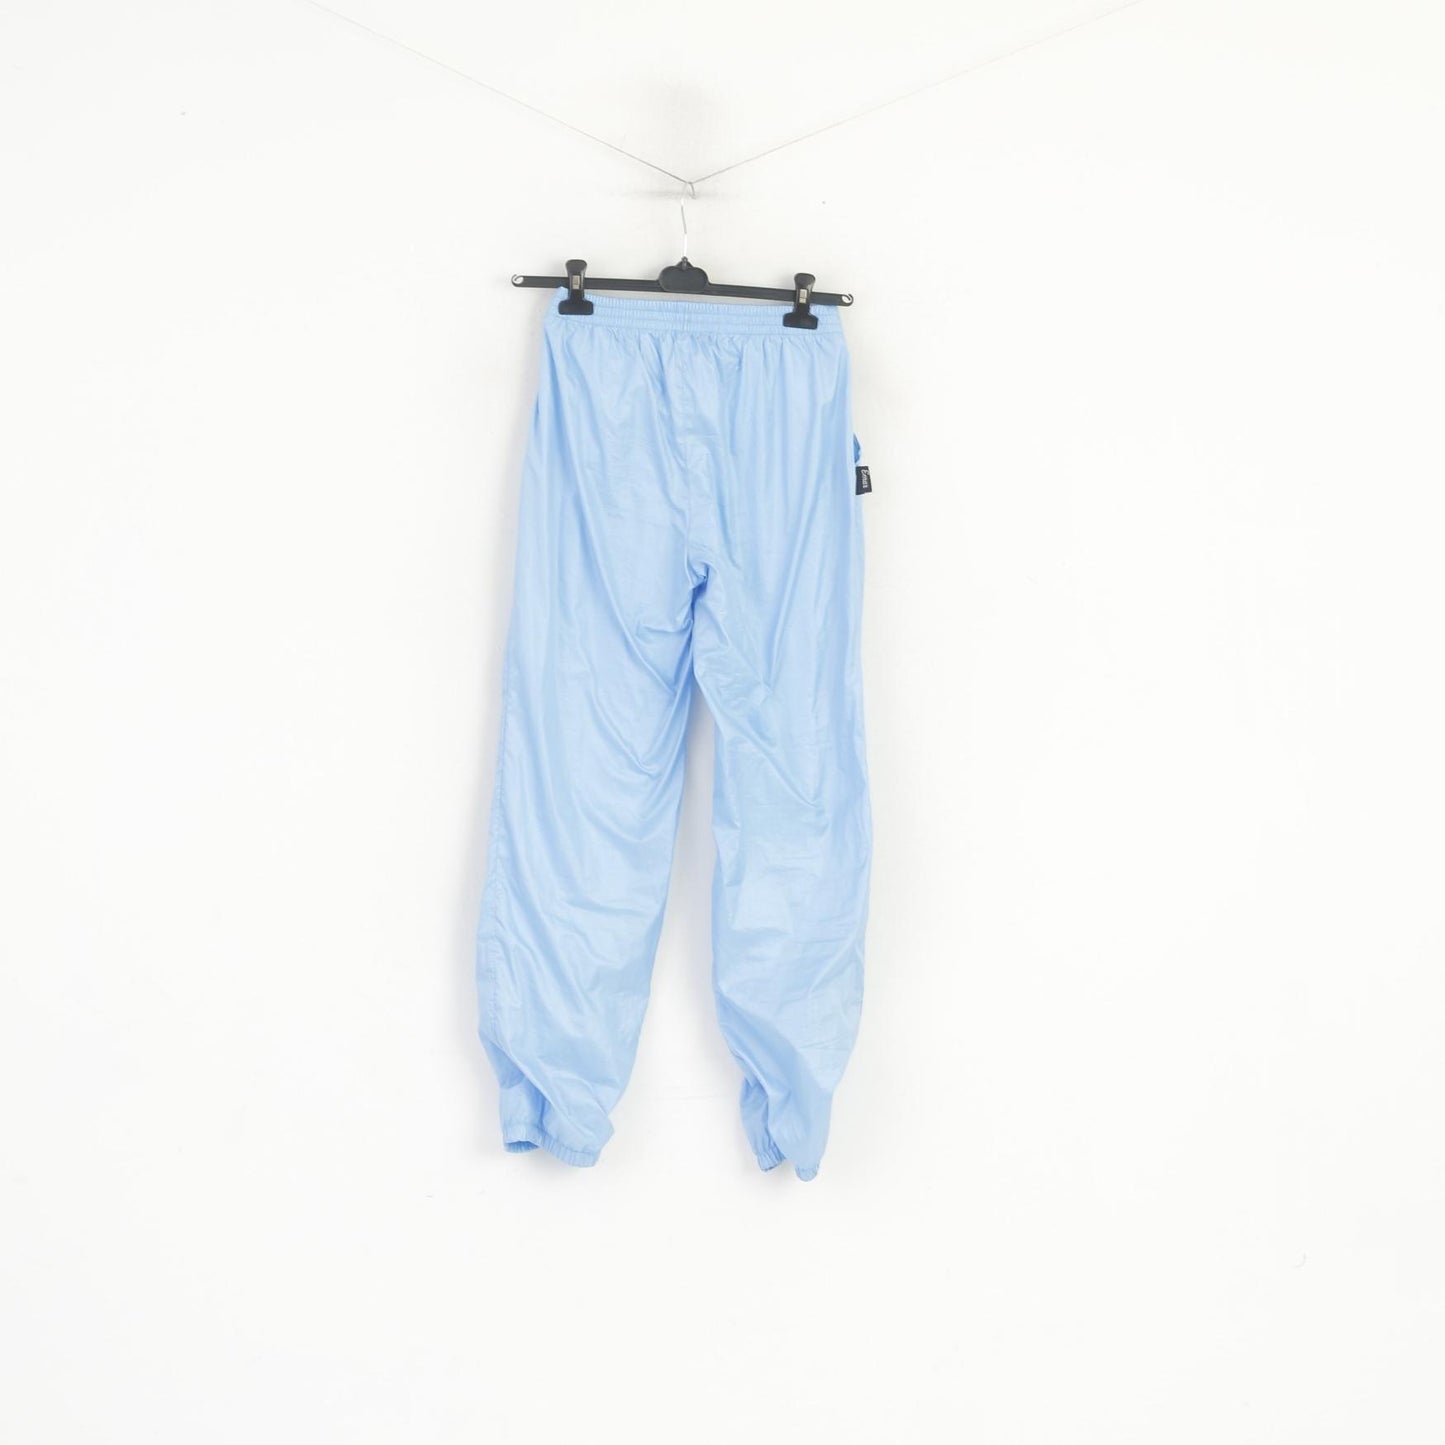 Emar Women S Sweatpants Blue Shiny Retro Activewear Gym Trousers